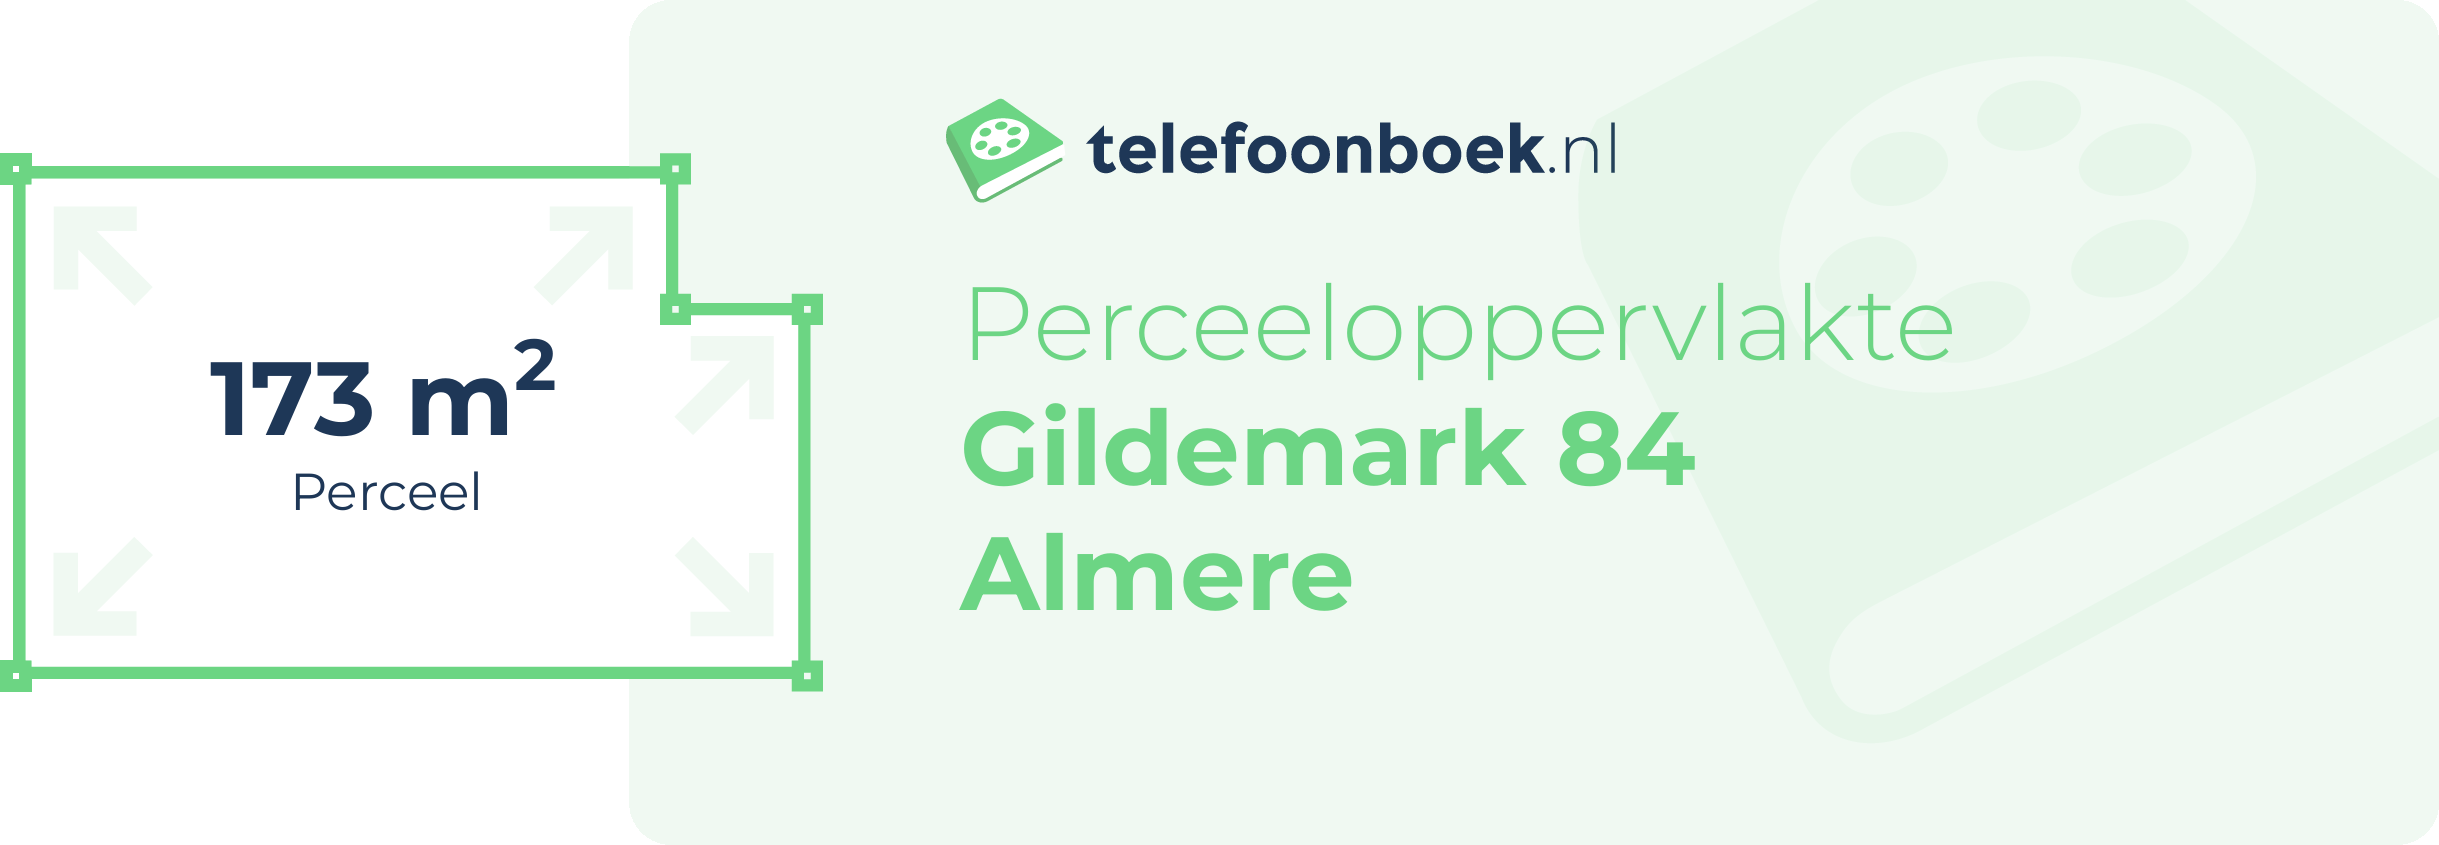 Perceeloppervlakte Gildemark 84 Almere